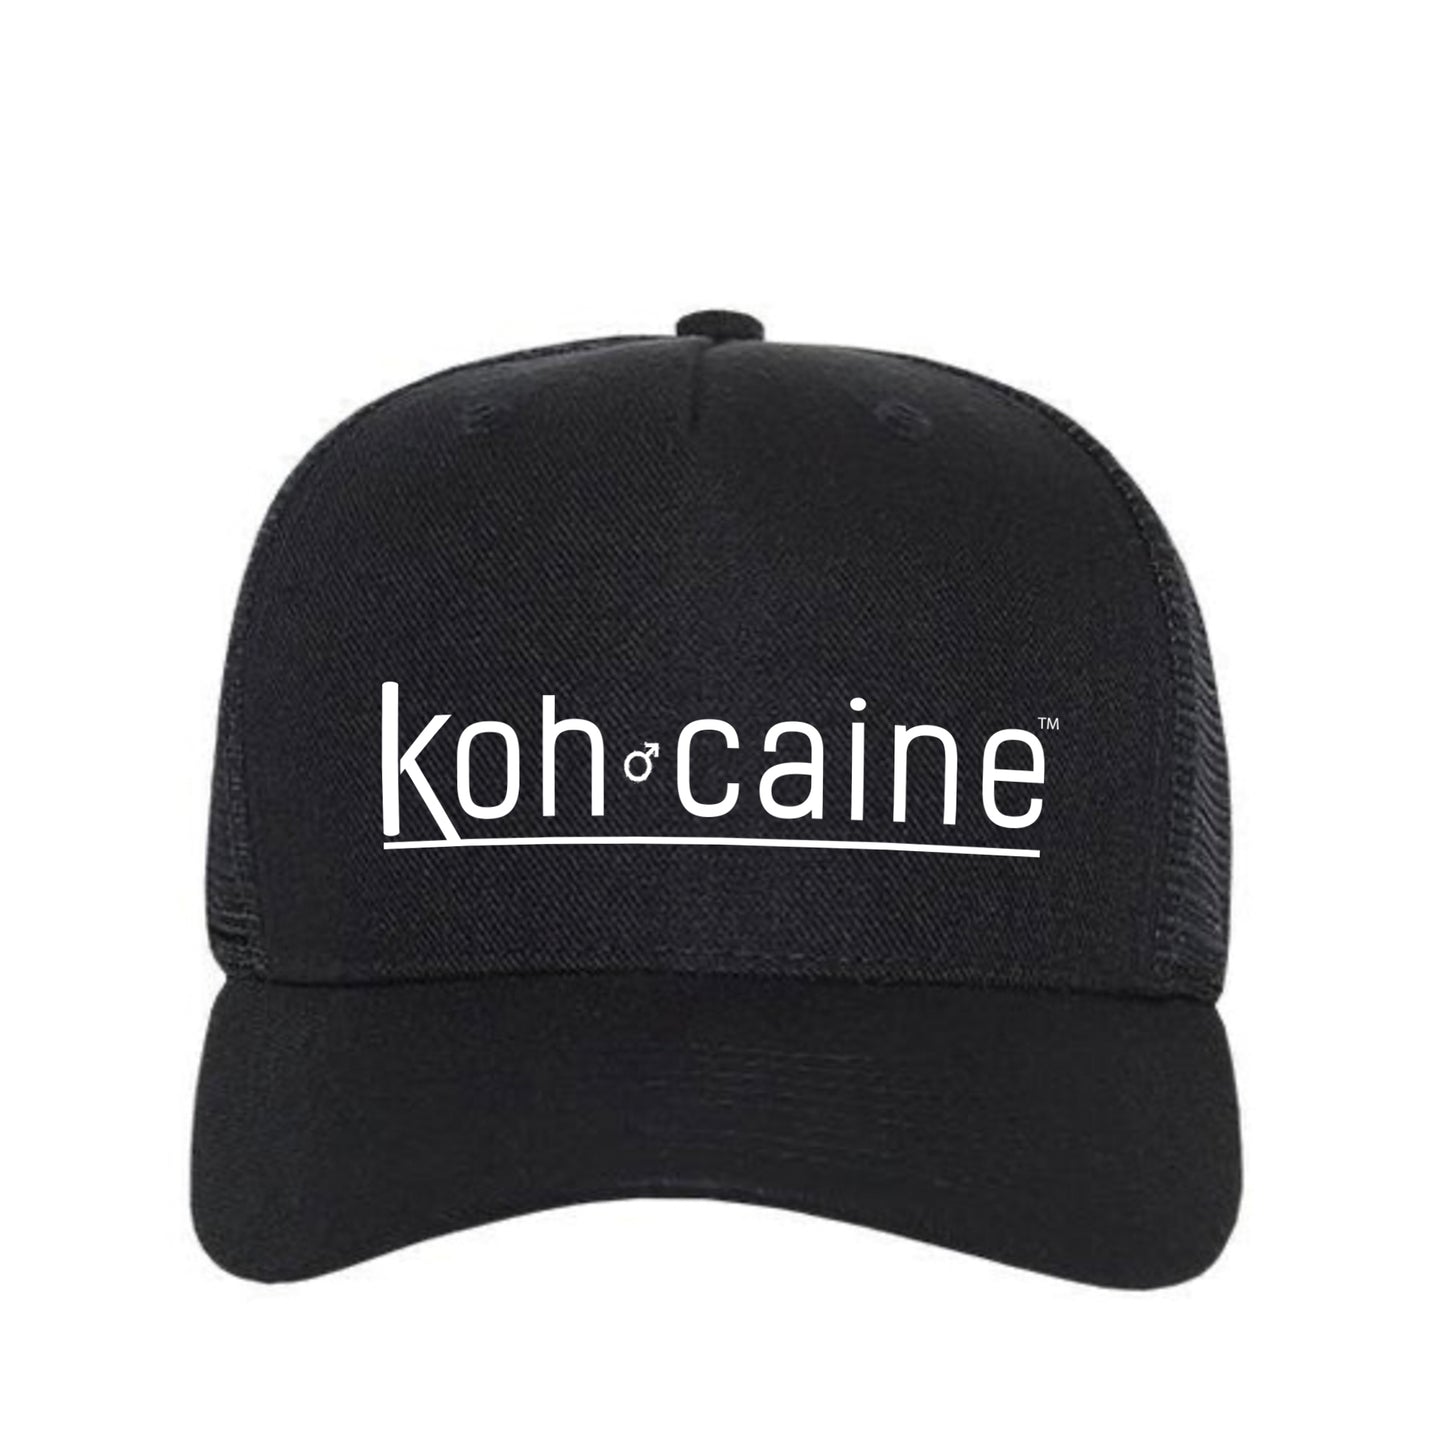 Kohcaine Hat - Mesh